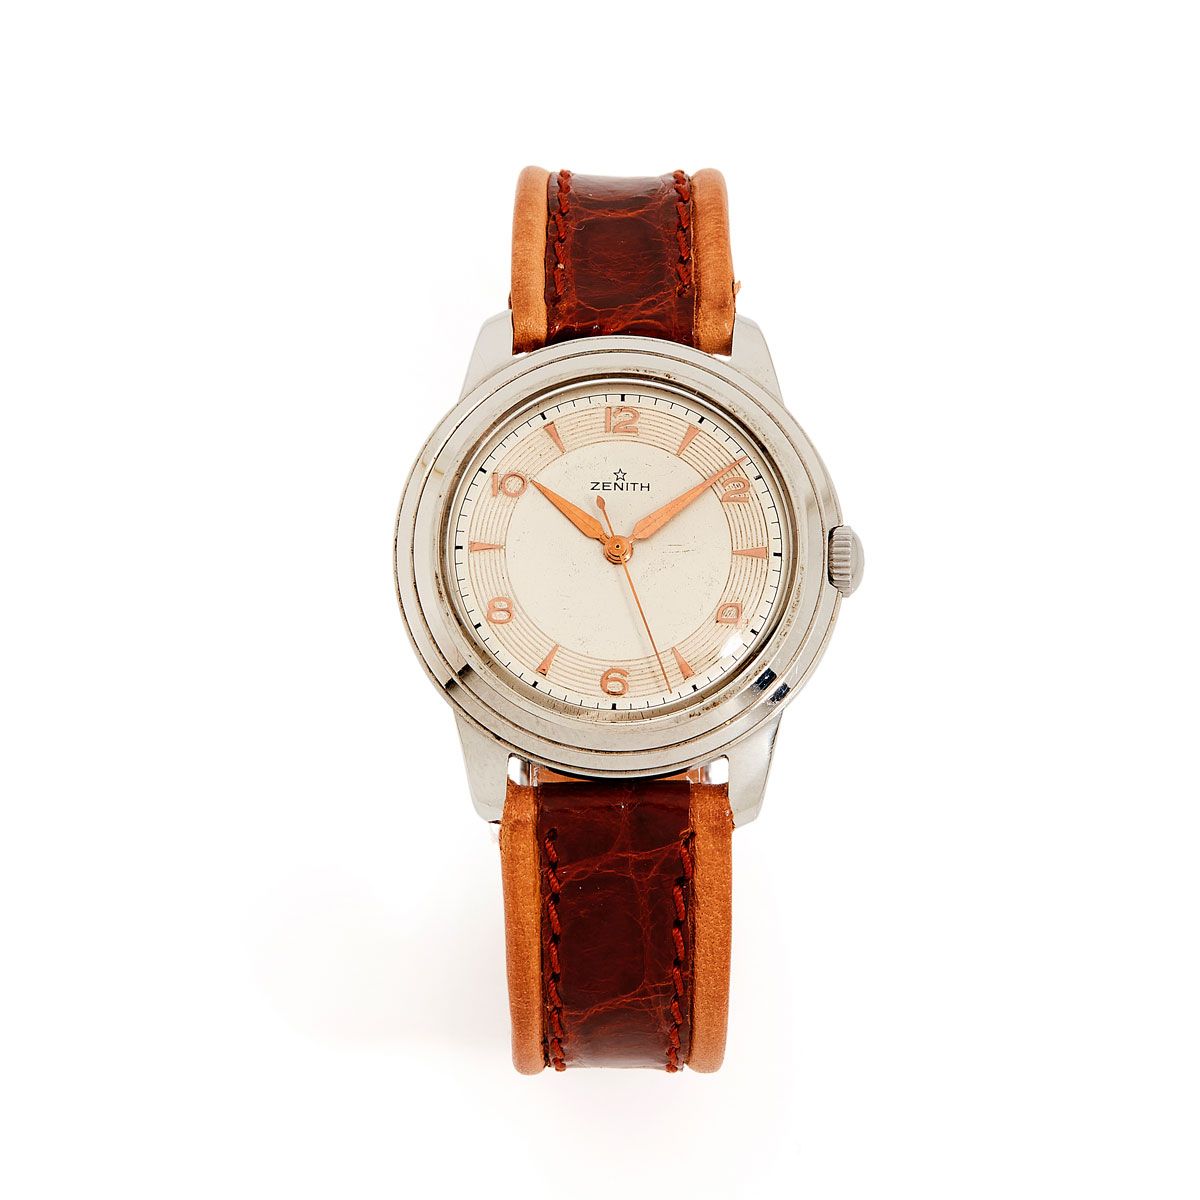 Null Zenith, No. 719606, circa 1950


Un bellissimo orologio vintage in acciaio,&hellip;